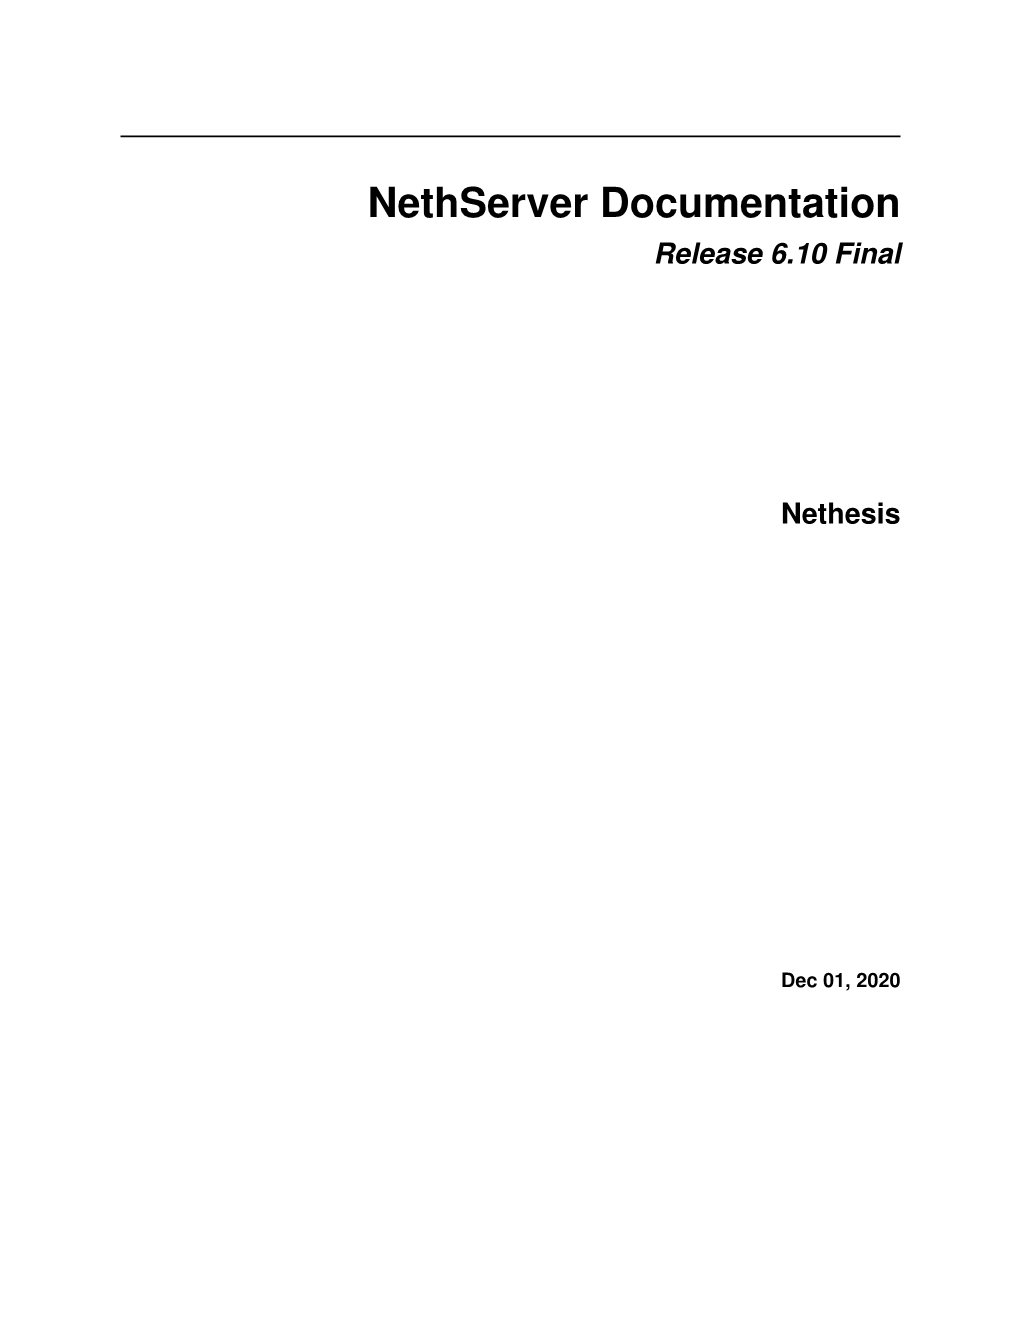 Nethserver Documentation Release 6.10 Final